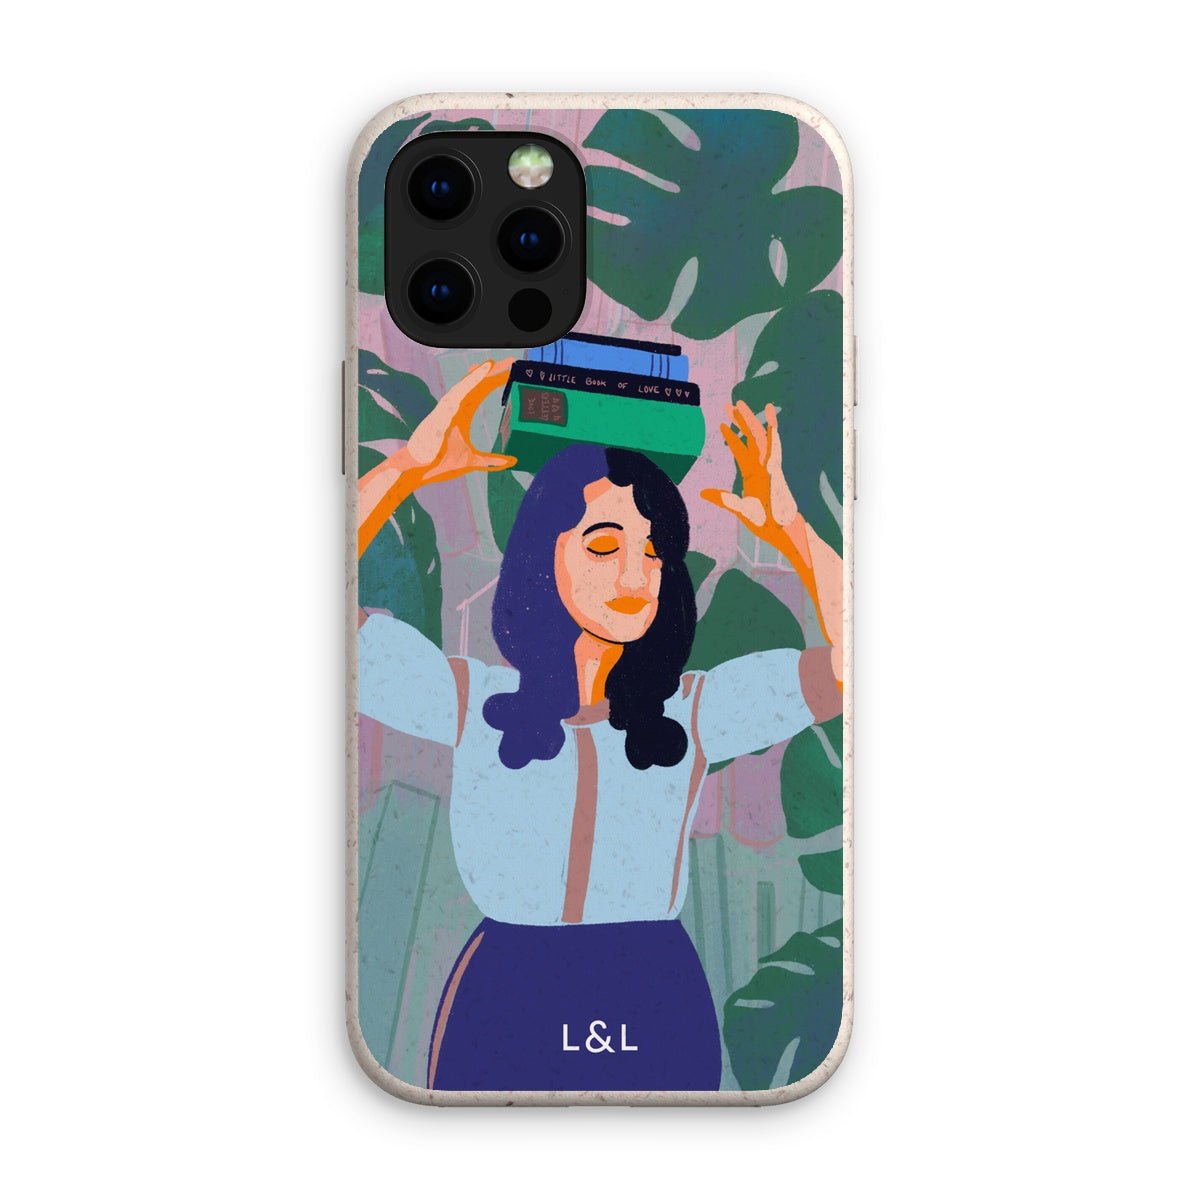 Powerful Woman Eco Phone Case - Loam & Lore